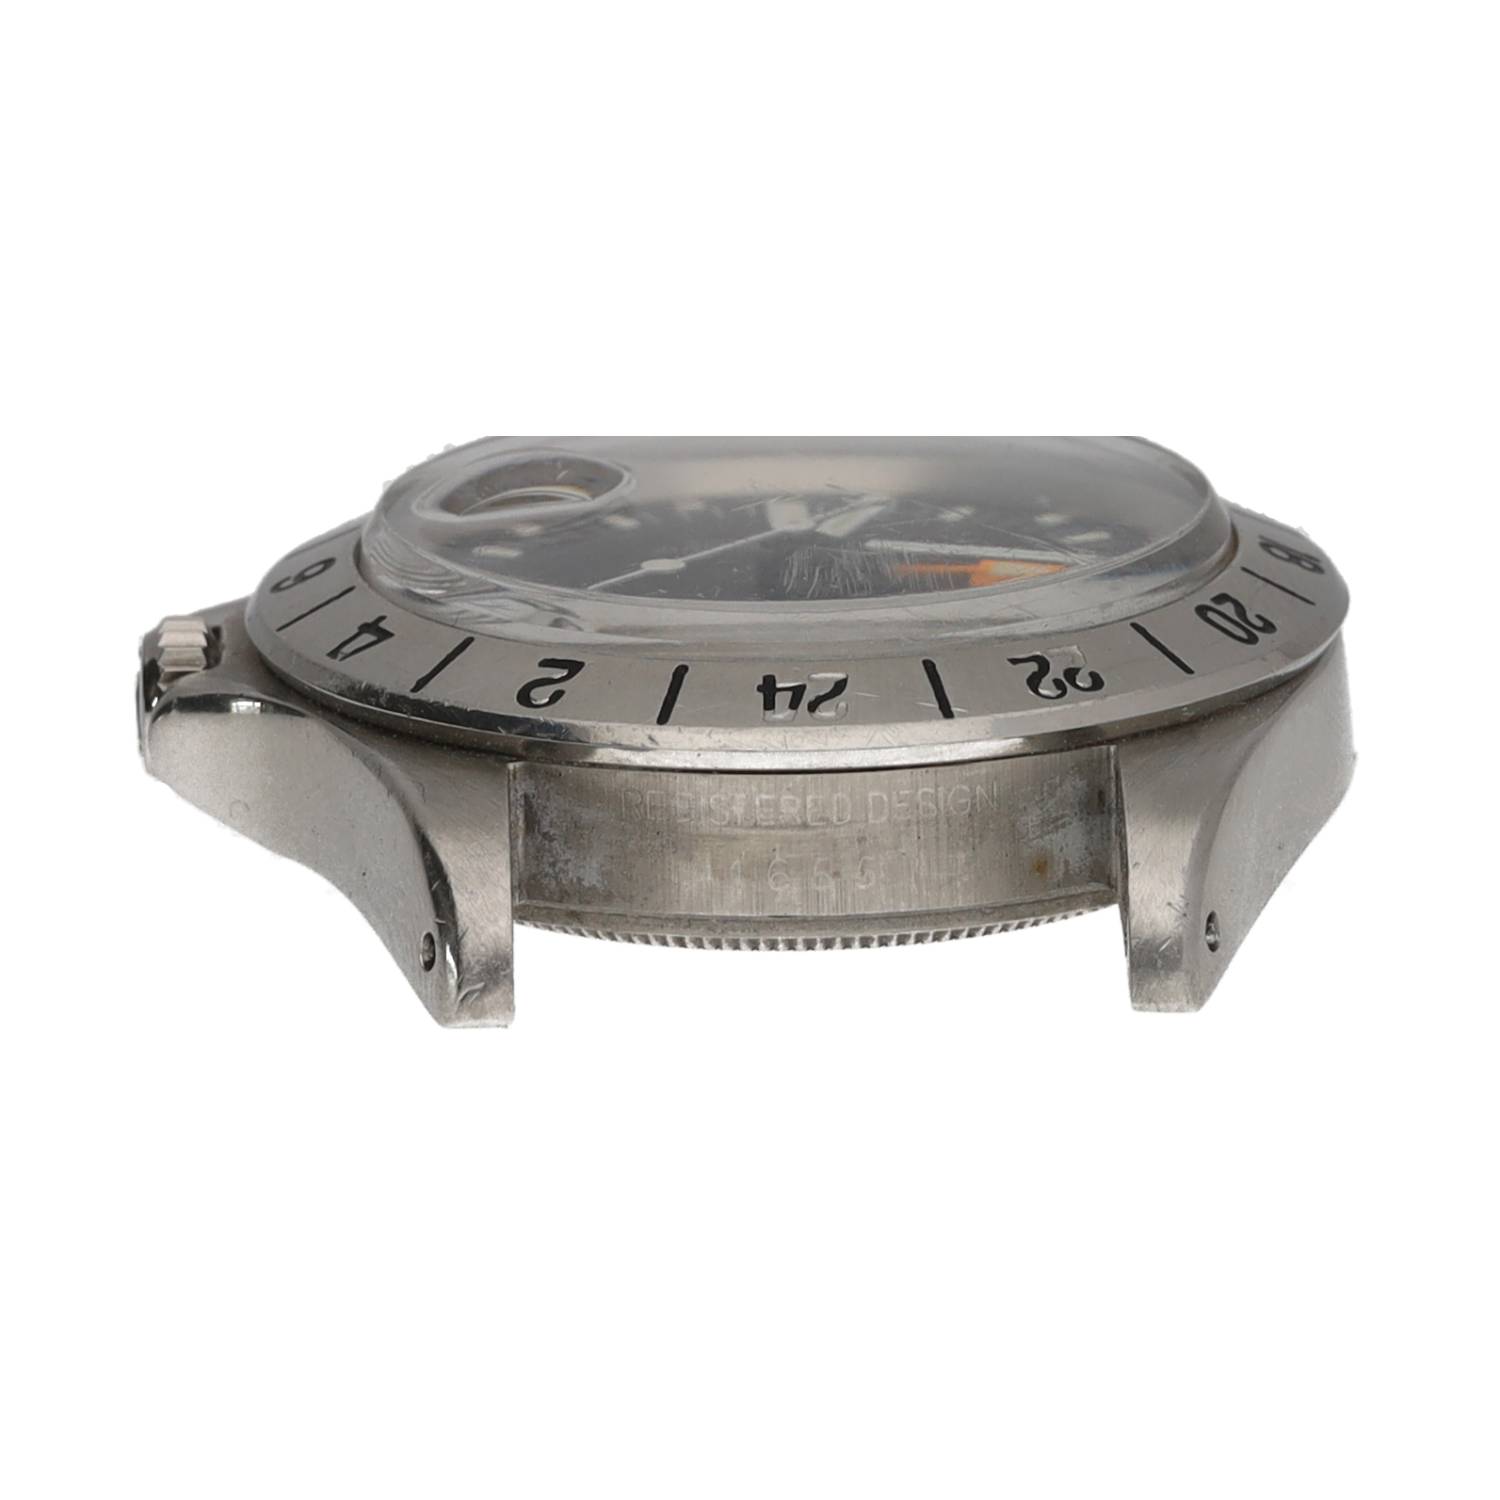 Rolex Oyster Perpetual Date Explorer II 'Steve McQueen' stainless steel gentleman's wristwatch, - Image 5 of 7